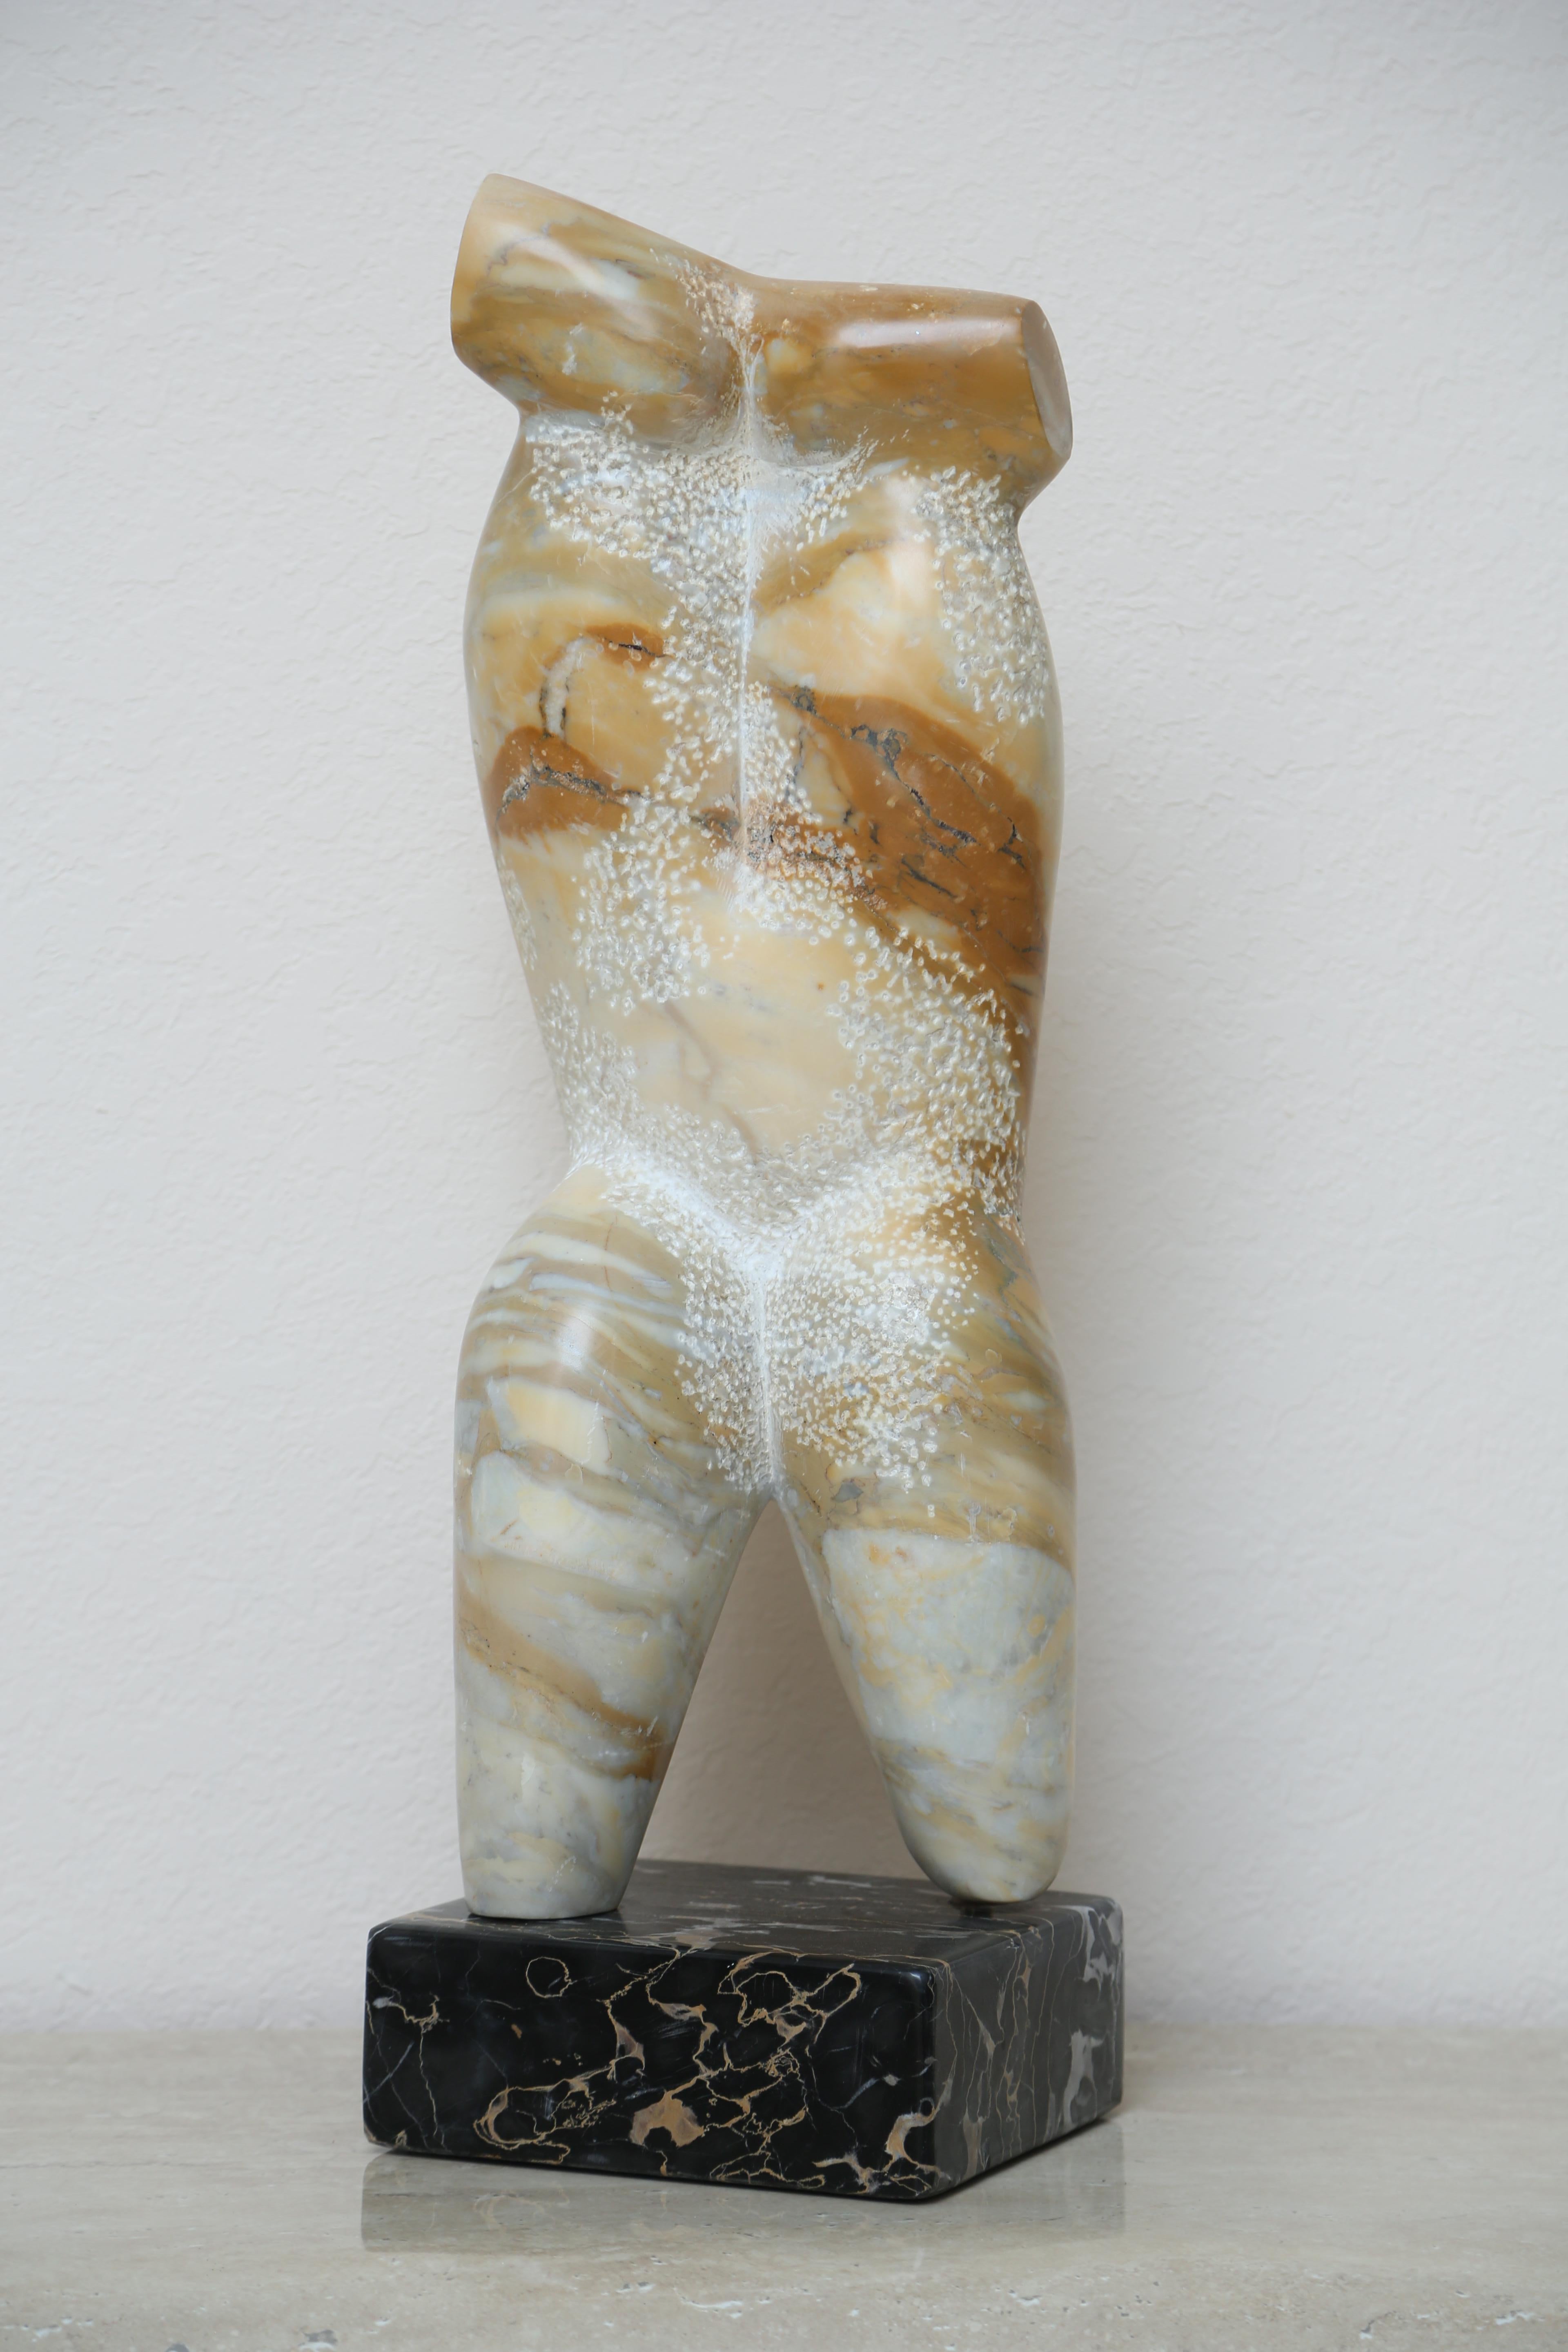 Massimo Villani Nude Sculpture - Yellow travertine sculpture